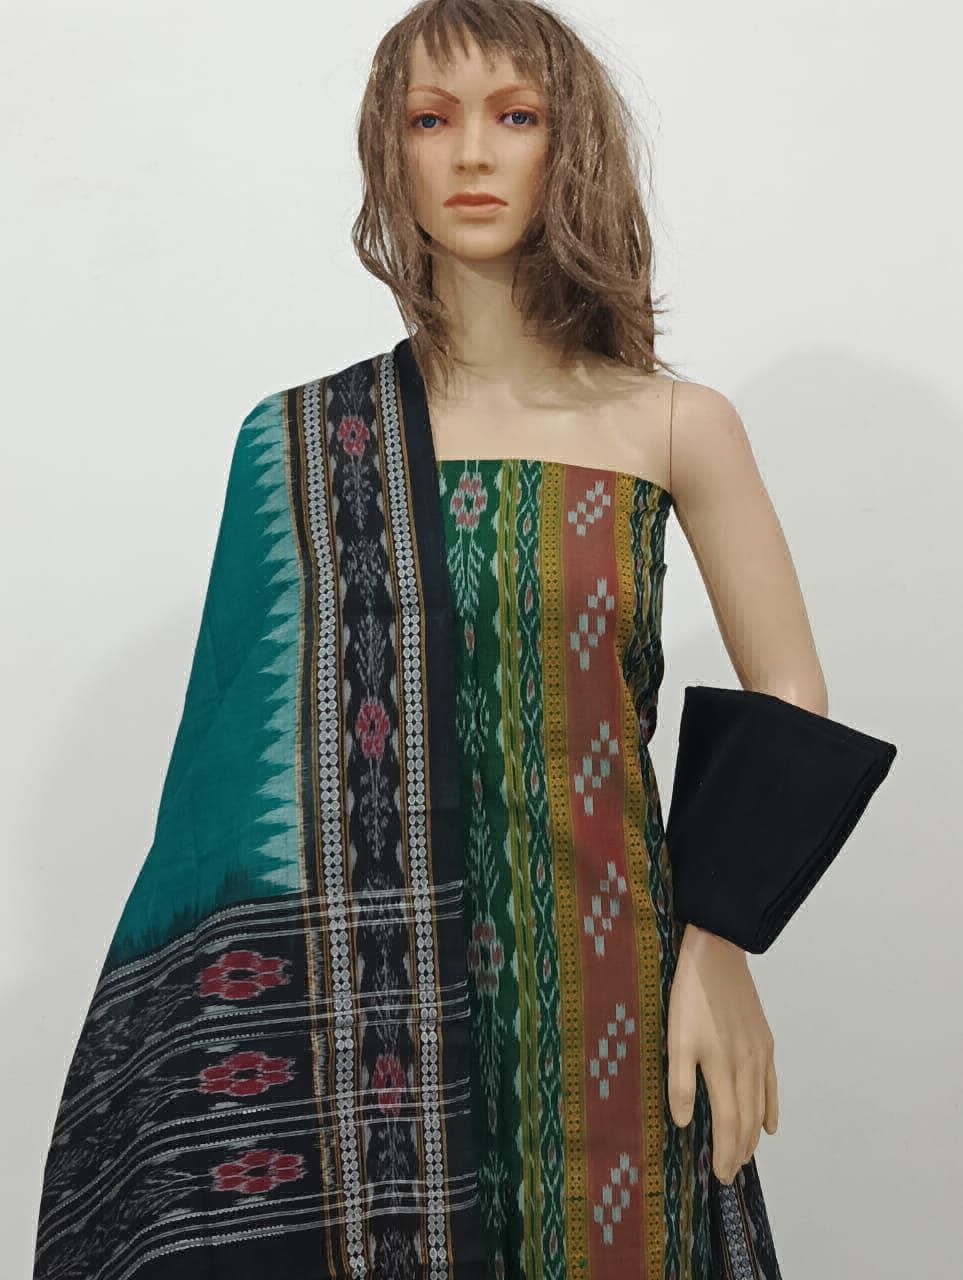 Buy SAAVITHRI HANDLOOMS Chirala Handloom Women's Cotton Unstitched Dress  Material (Light Purple) at Amazon.in